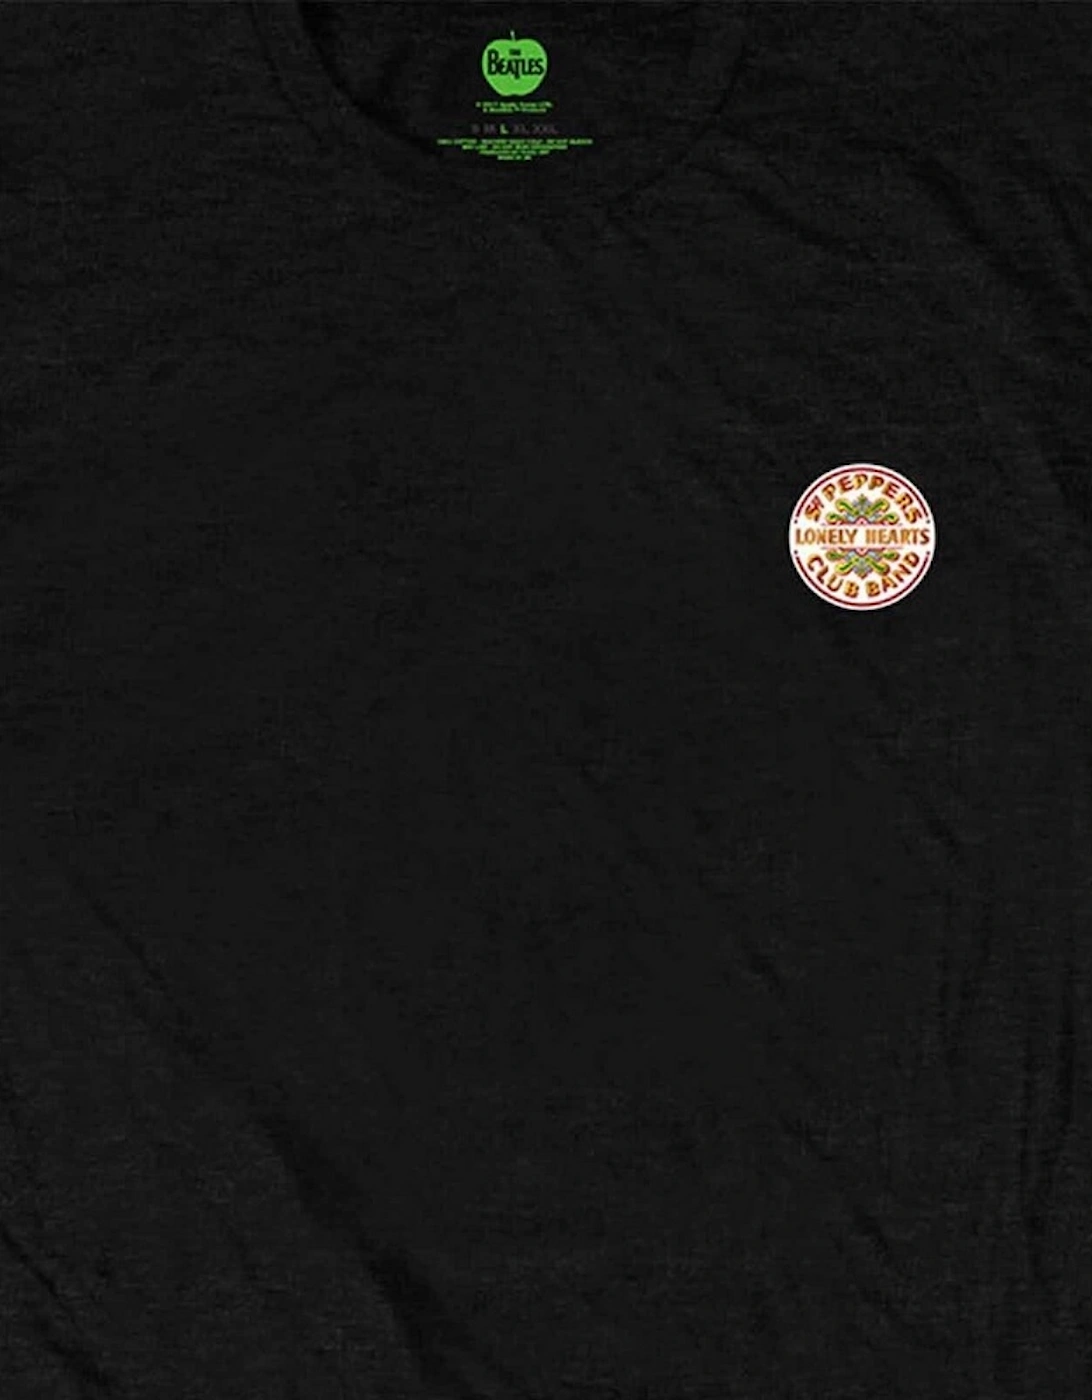 Unisex Adult Sgt Pepper T-Shirt